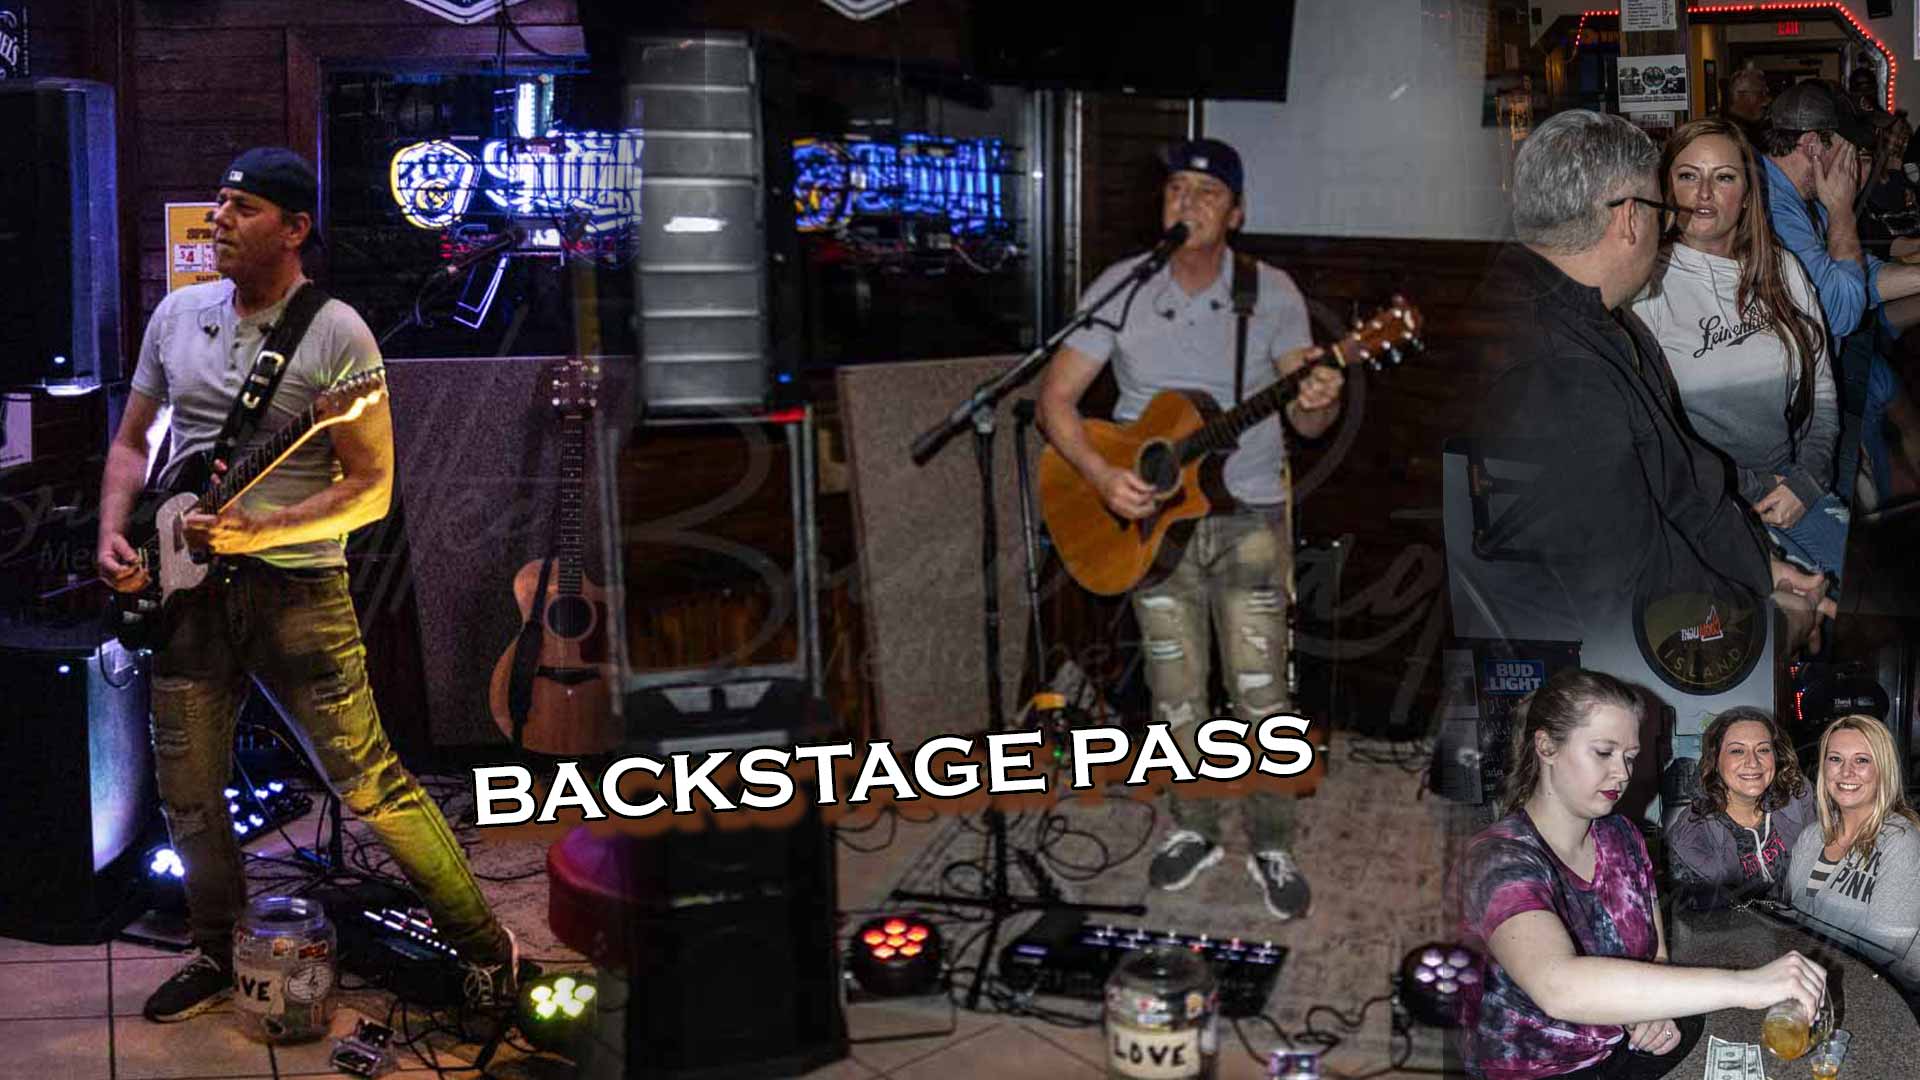 Backstage Pass at Plank Road Pub in Menasha